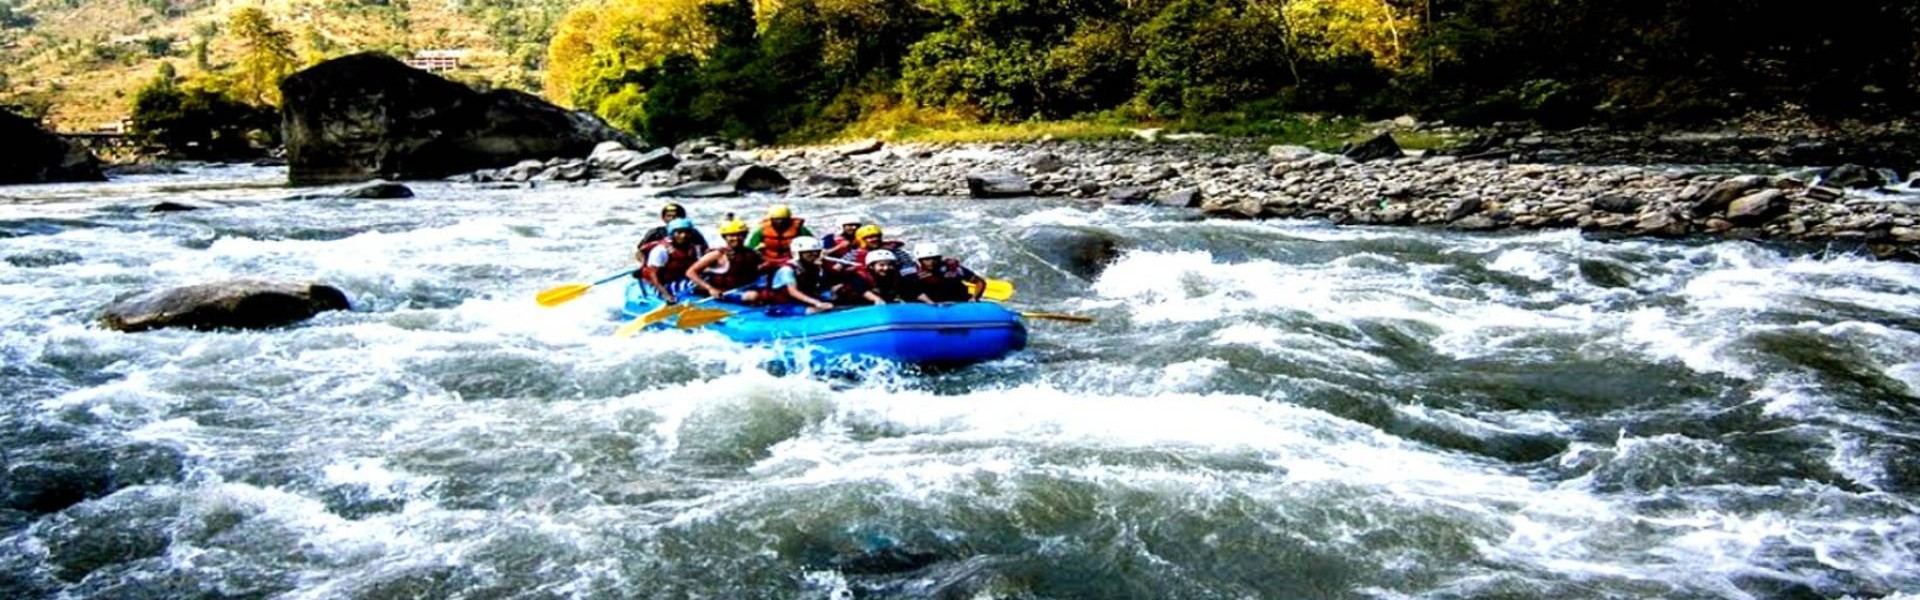 bhote kosi river rafting